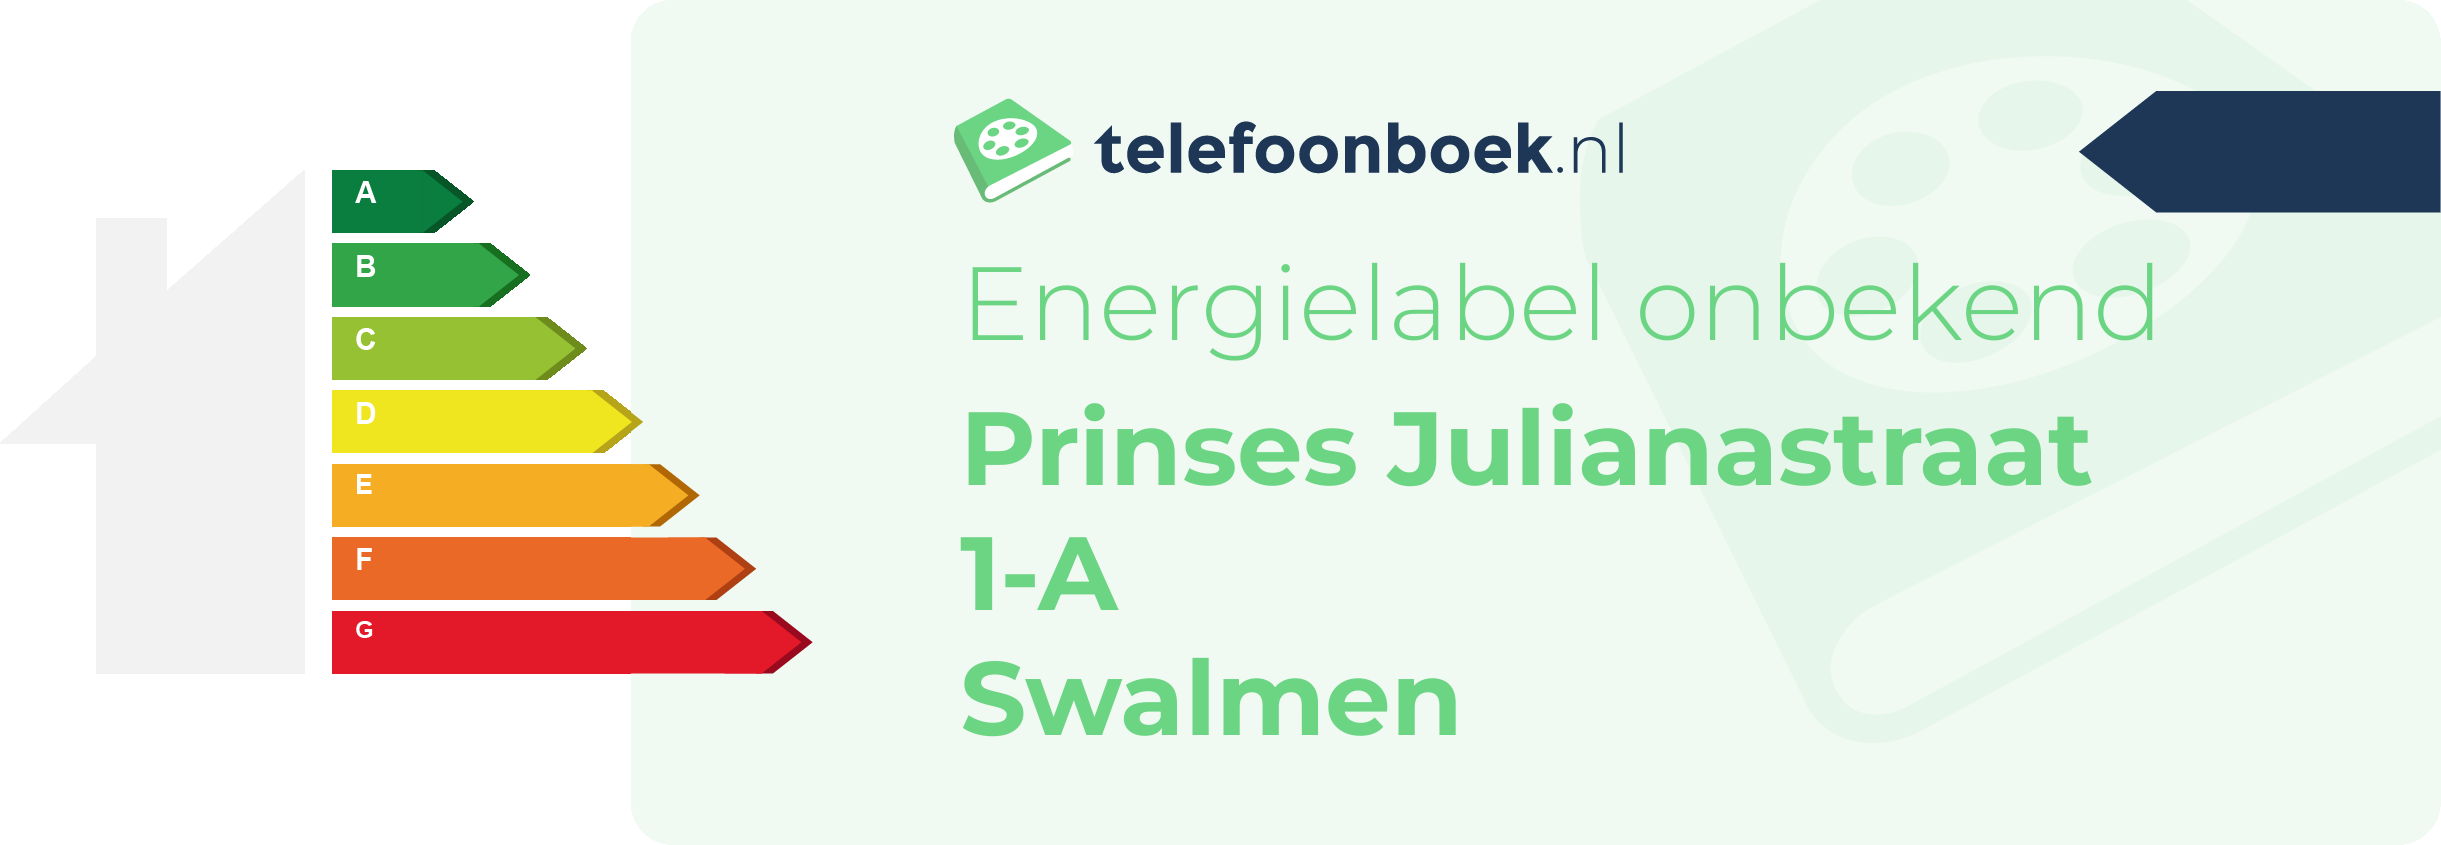 Energielabel Prinses Julianastraat 1-A Swalmen